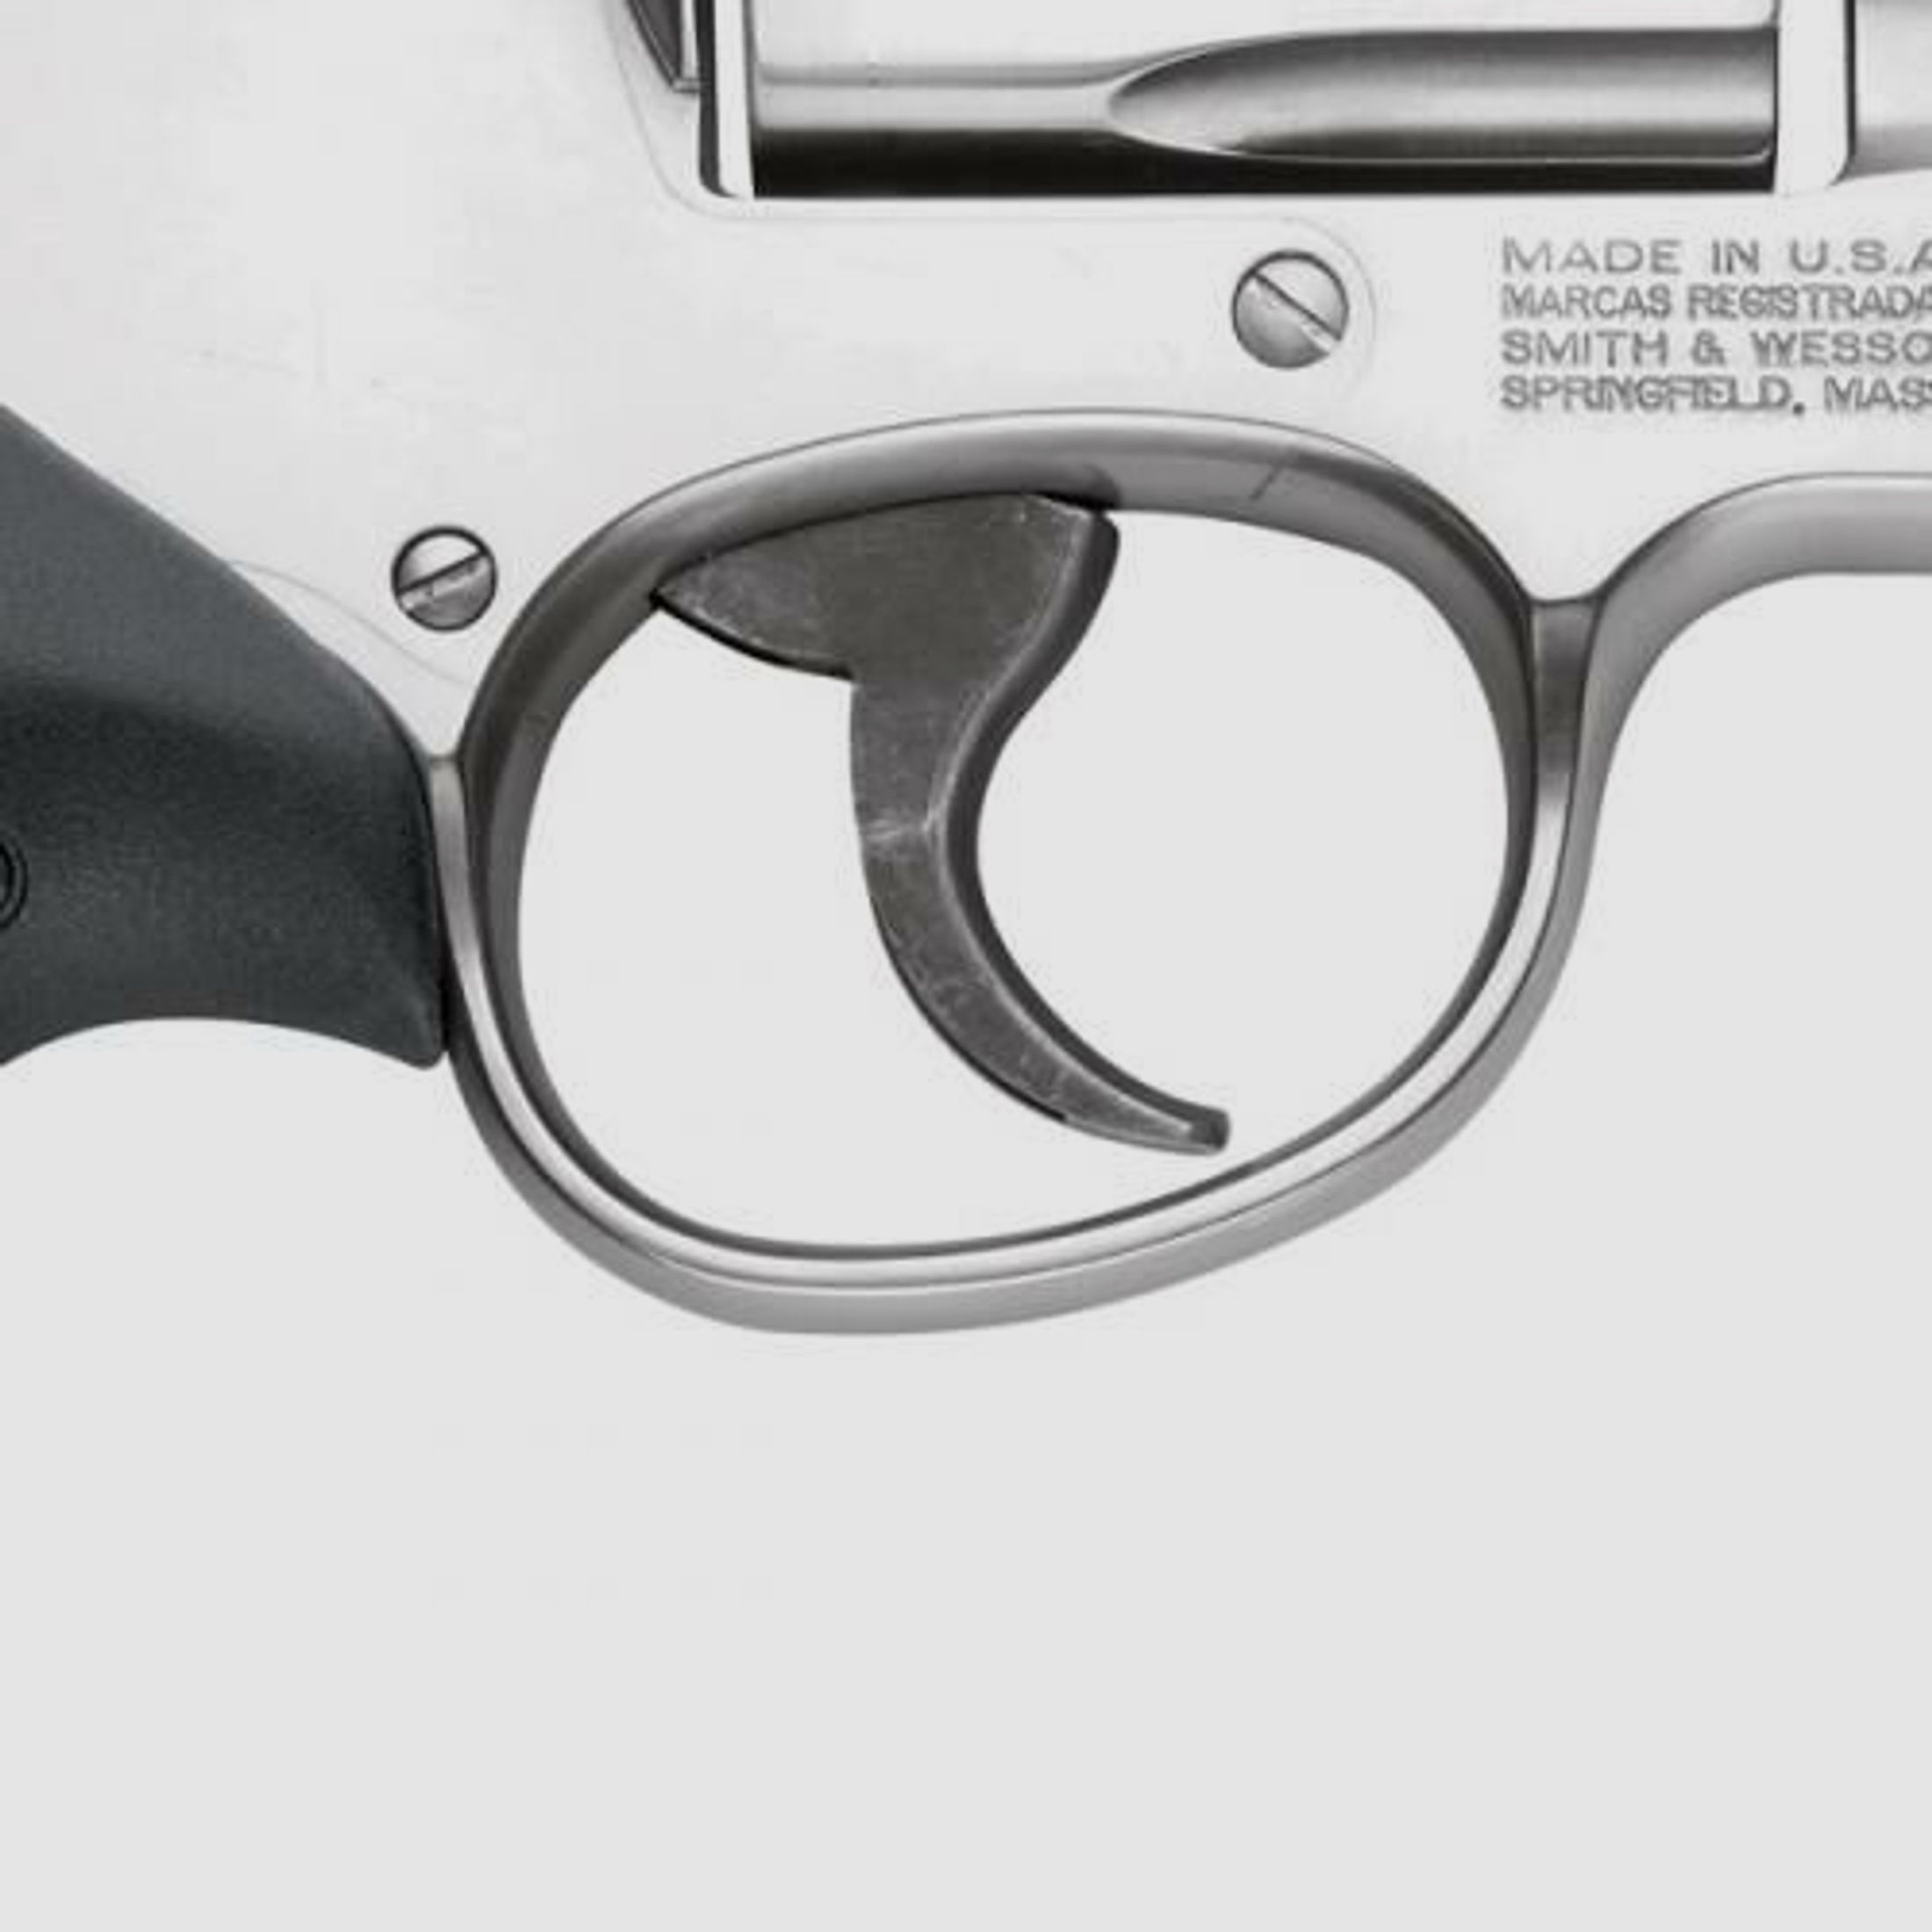 Smith & Wesson	 Mod. 629 - 4" Lauf - Kal. 44 Mag.